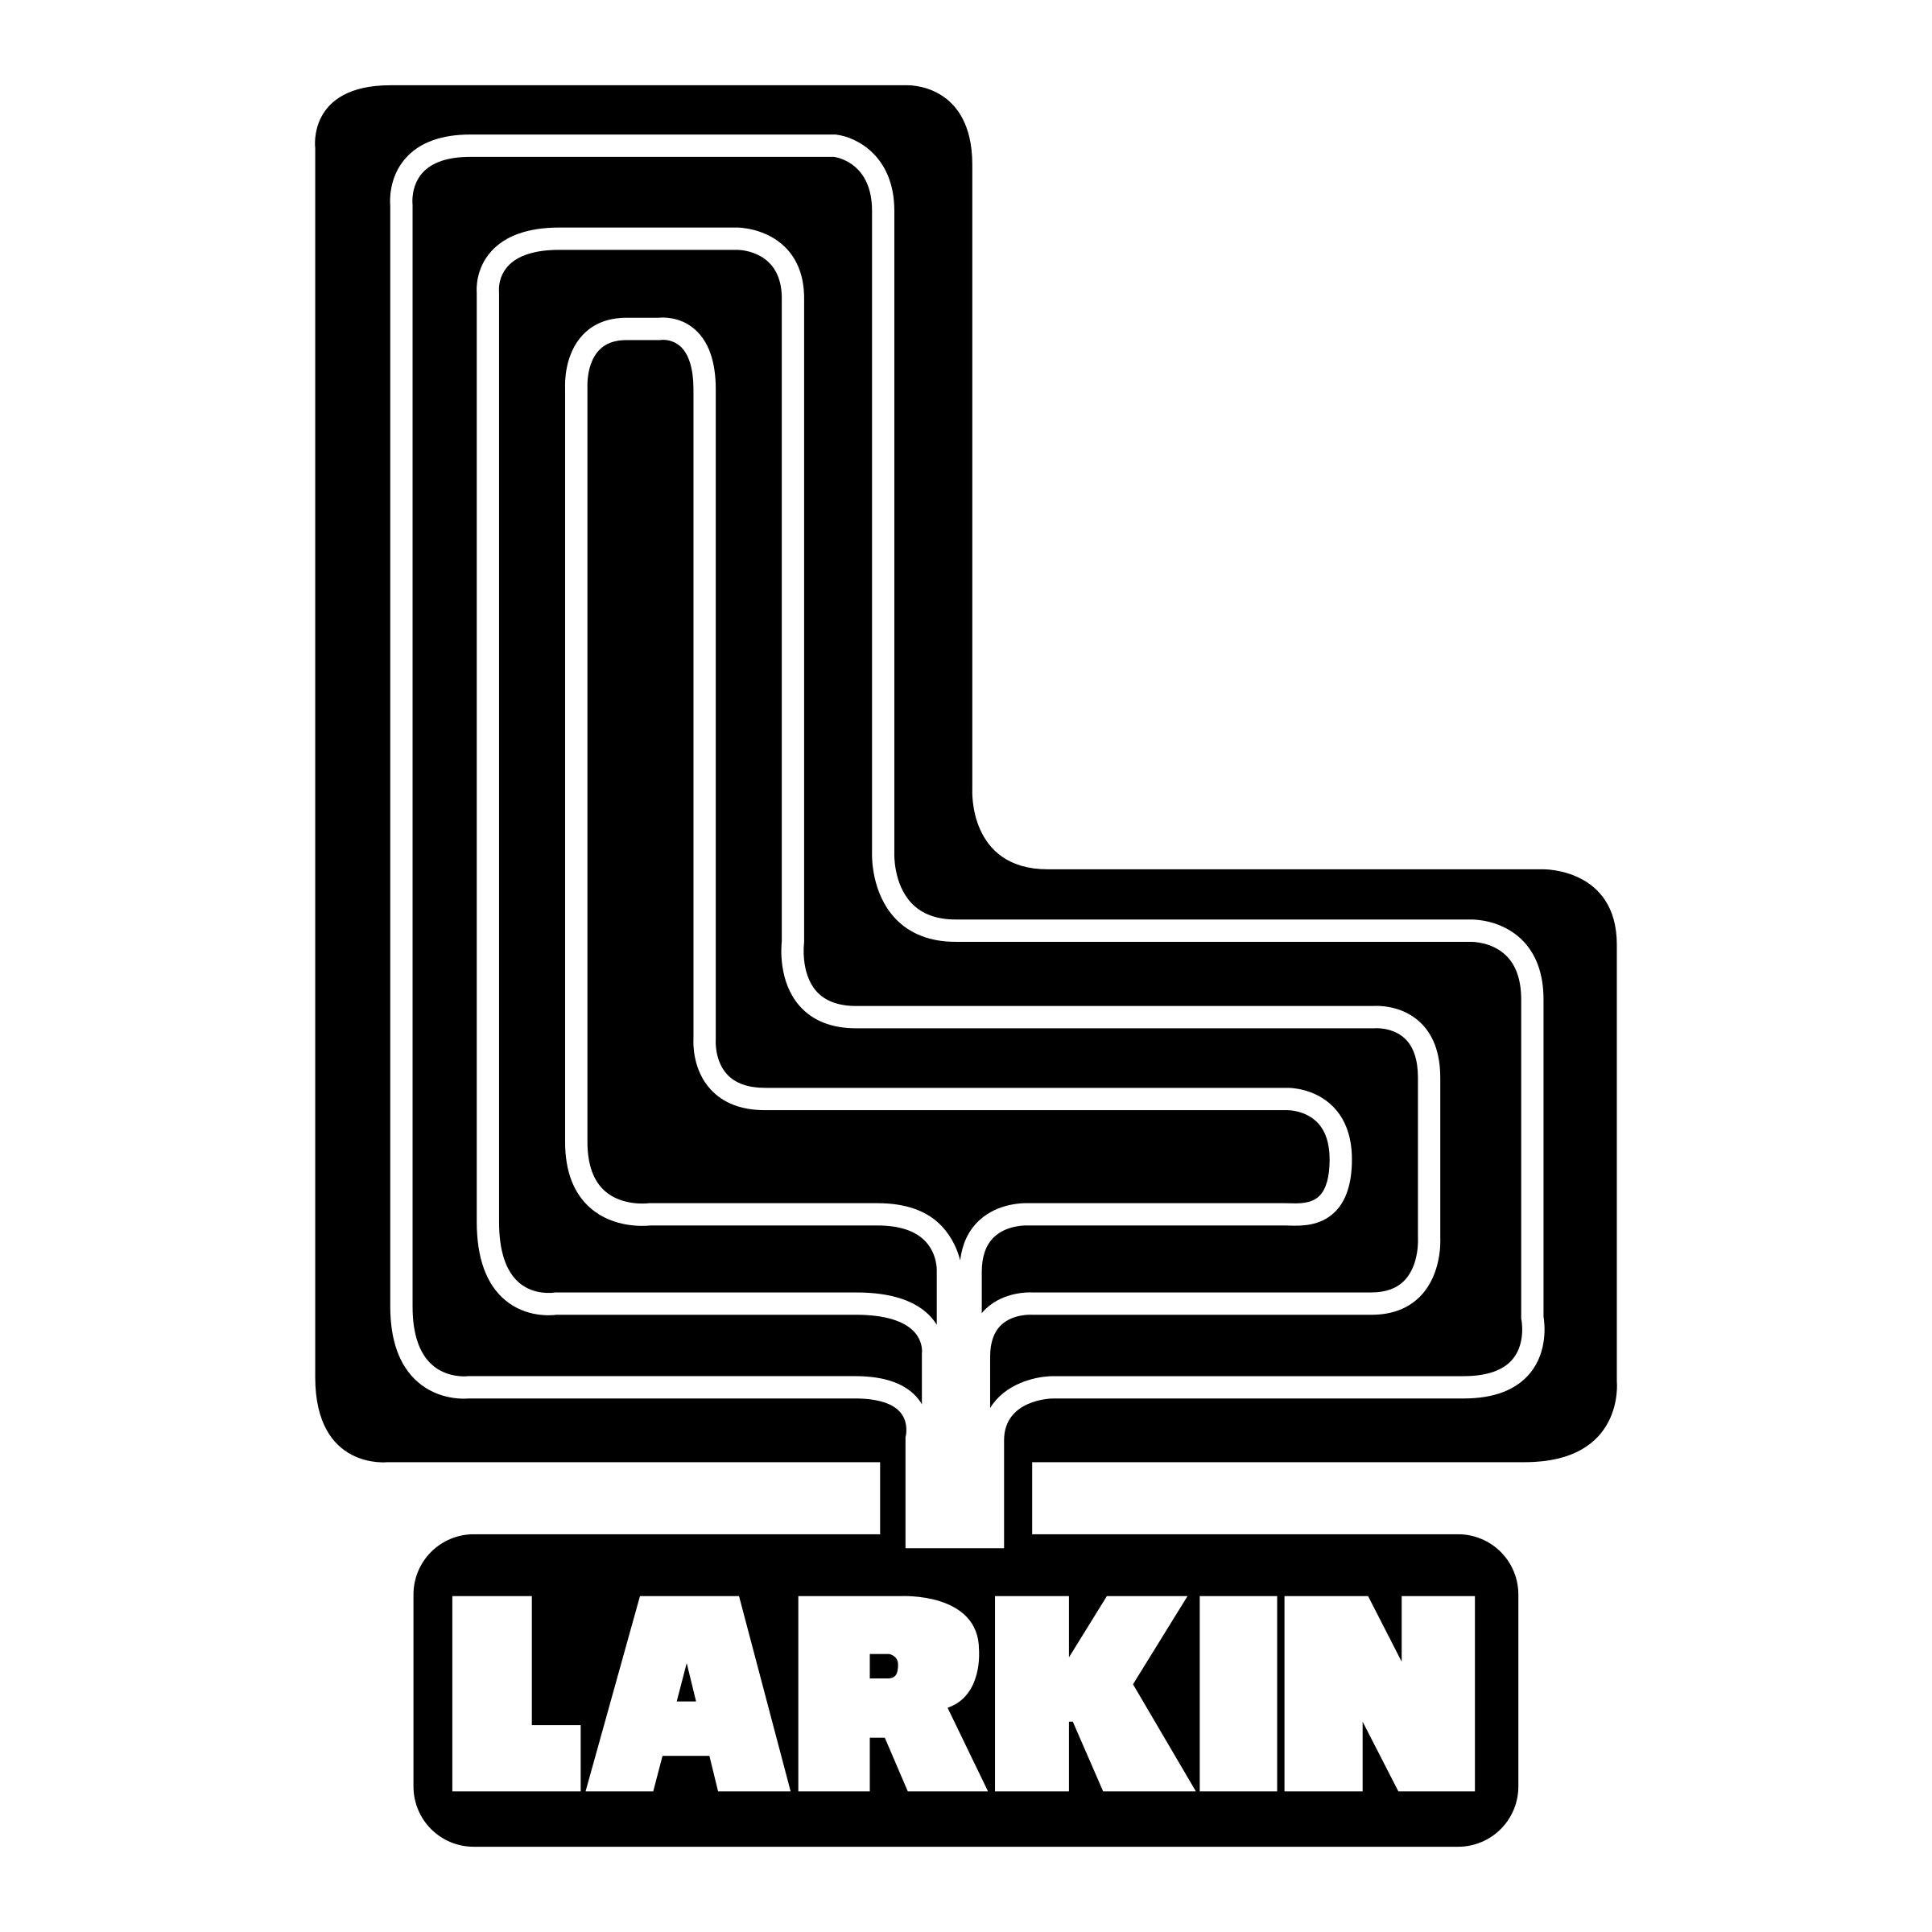 Larkin Logo - Larkin Logo PNG Transparent & SVG Vector - Freebie Supply